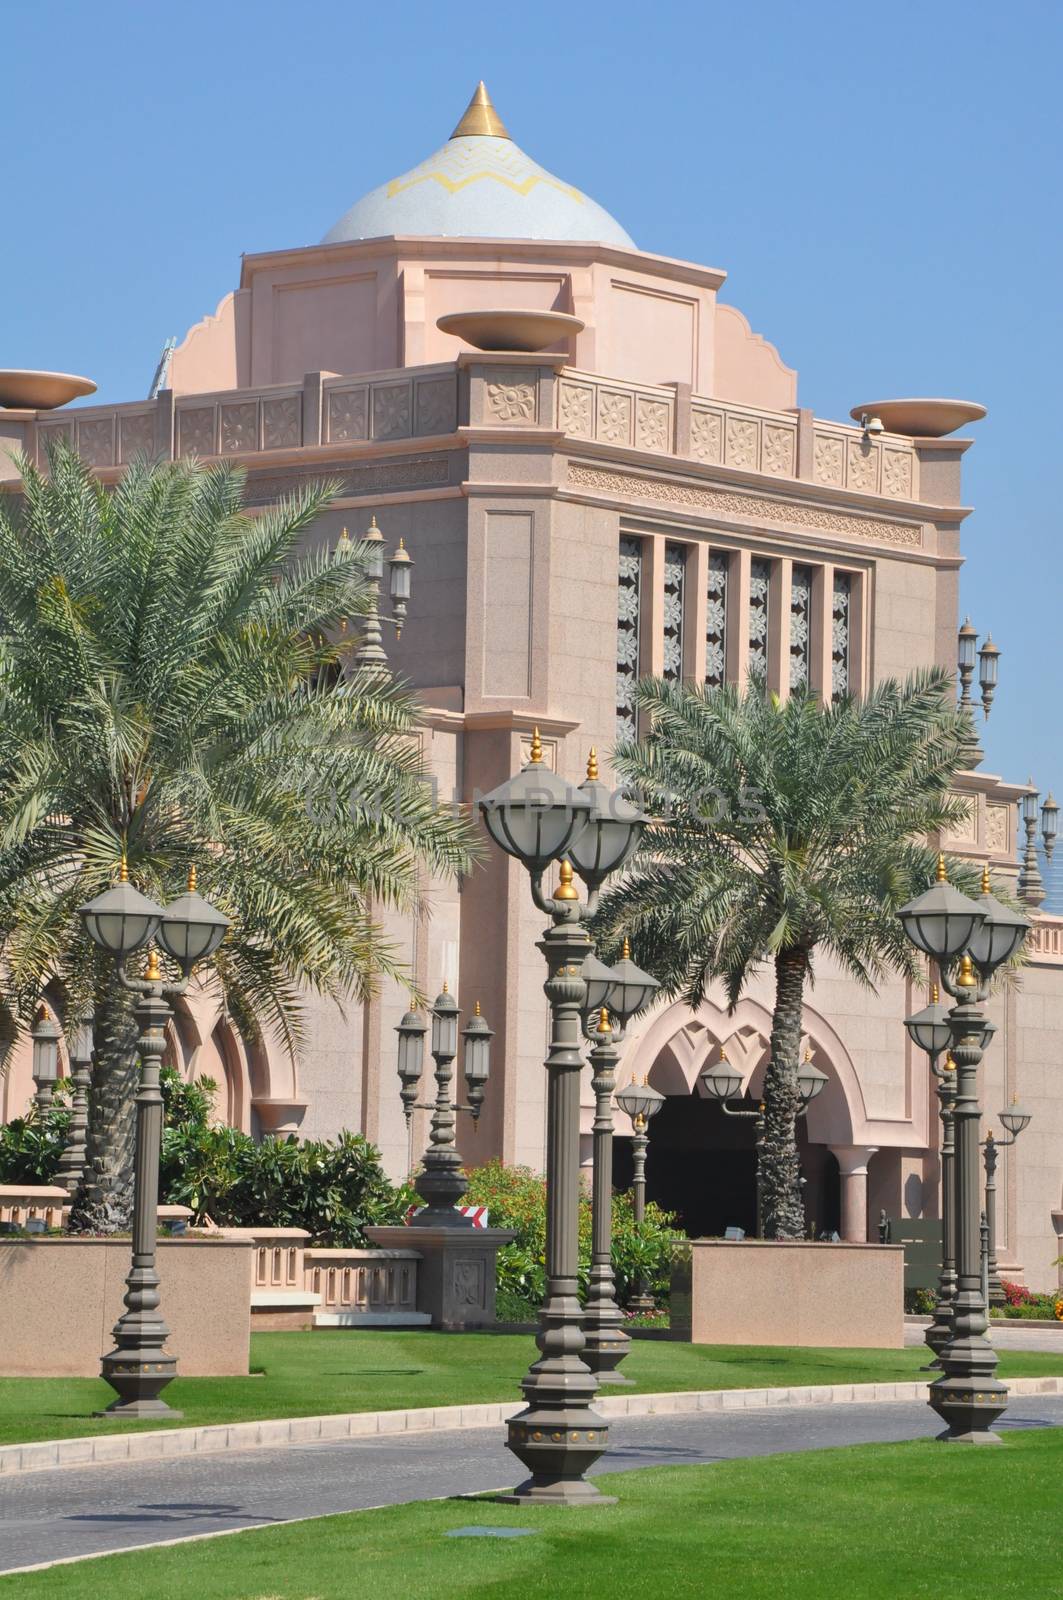 Emirates Palace Hotel in Abu Dhabi, UAE by sainaniritu